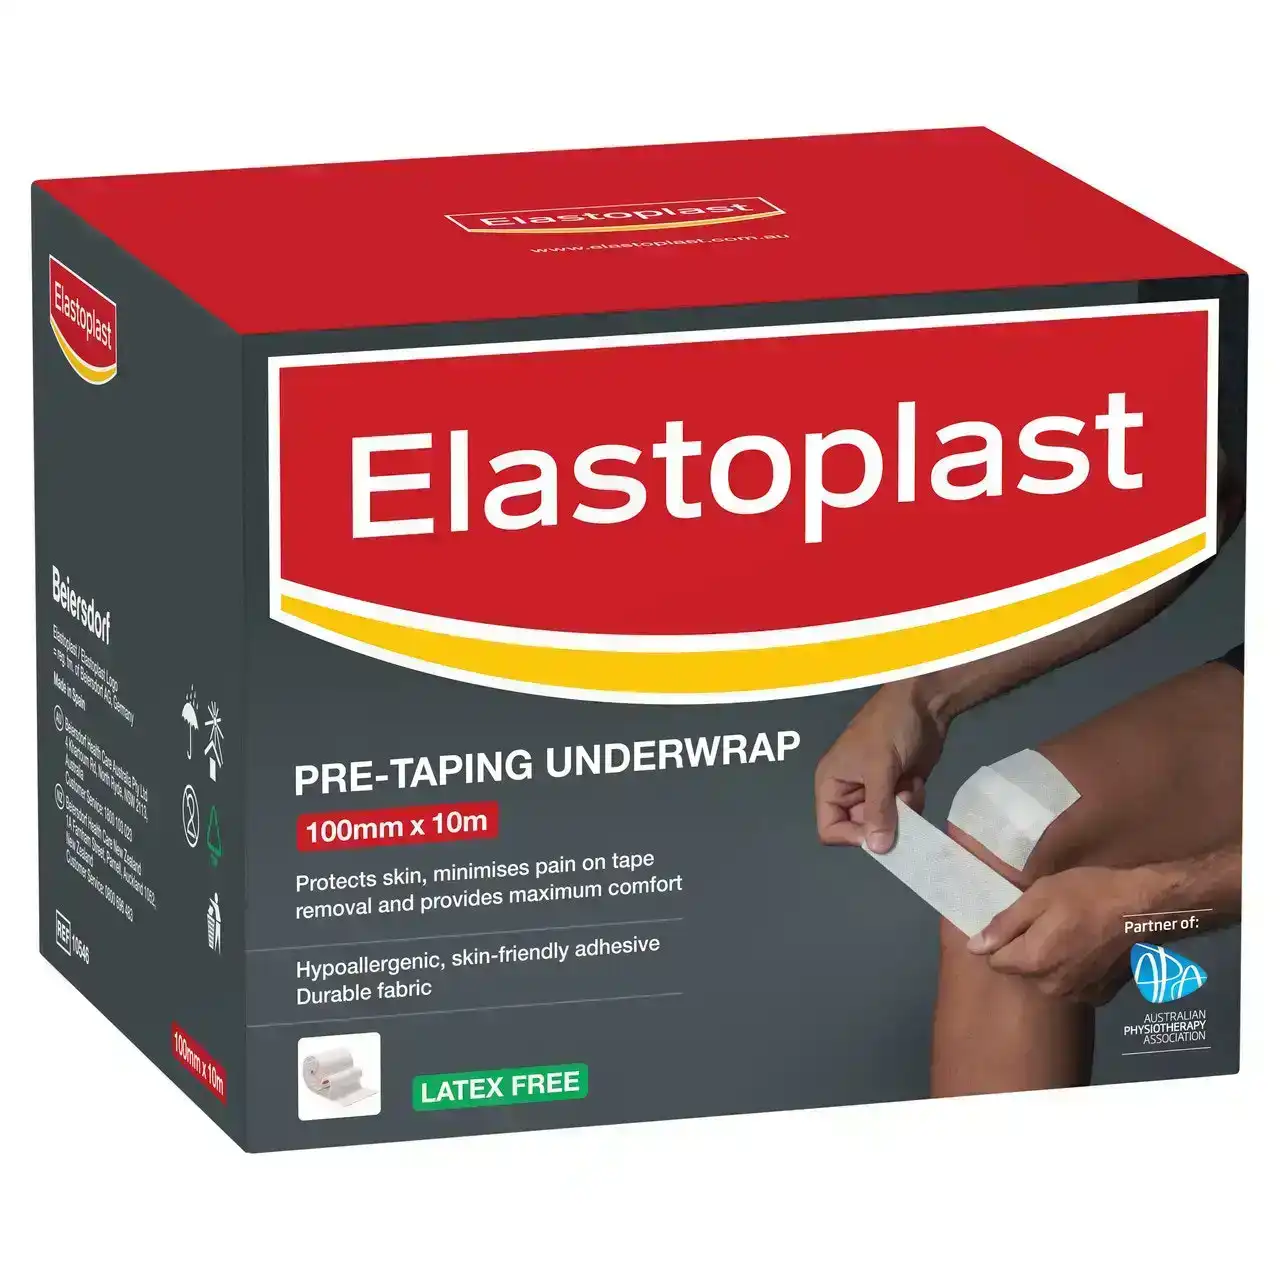 Elastoplast Pre-Taping Underwrap 100mm x 10m